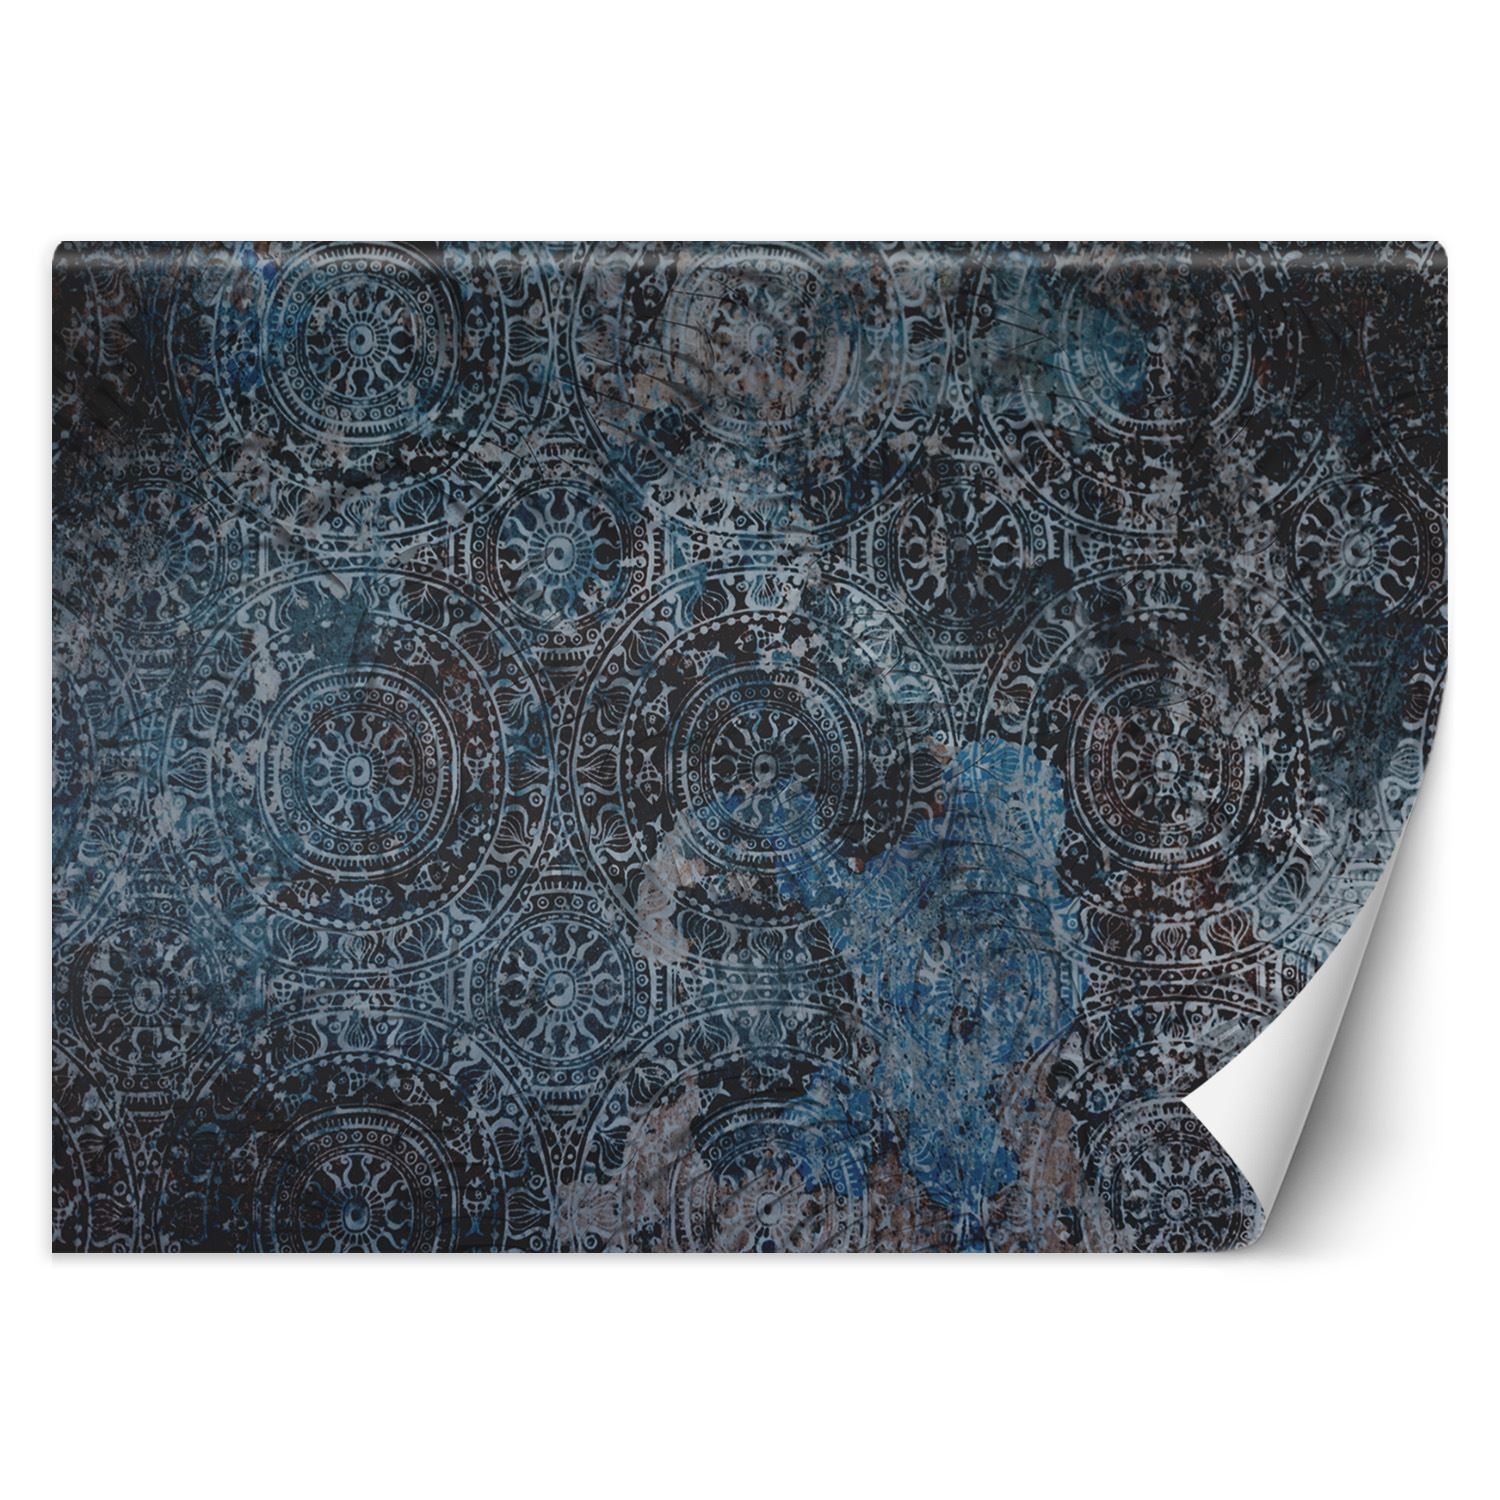 Trend24 – Behang – Mandala Vintage – Behangpapier – Behang Woonkamer – Fotobehang – 200x140x2 cm – Incl. behanglijm